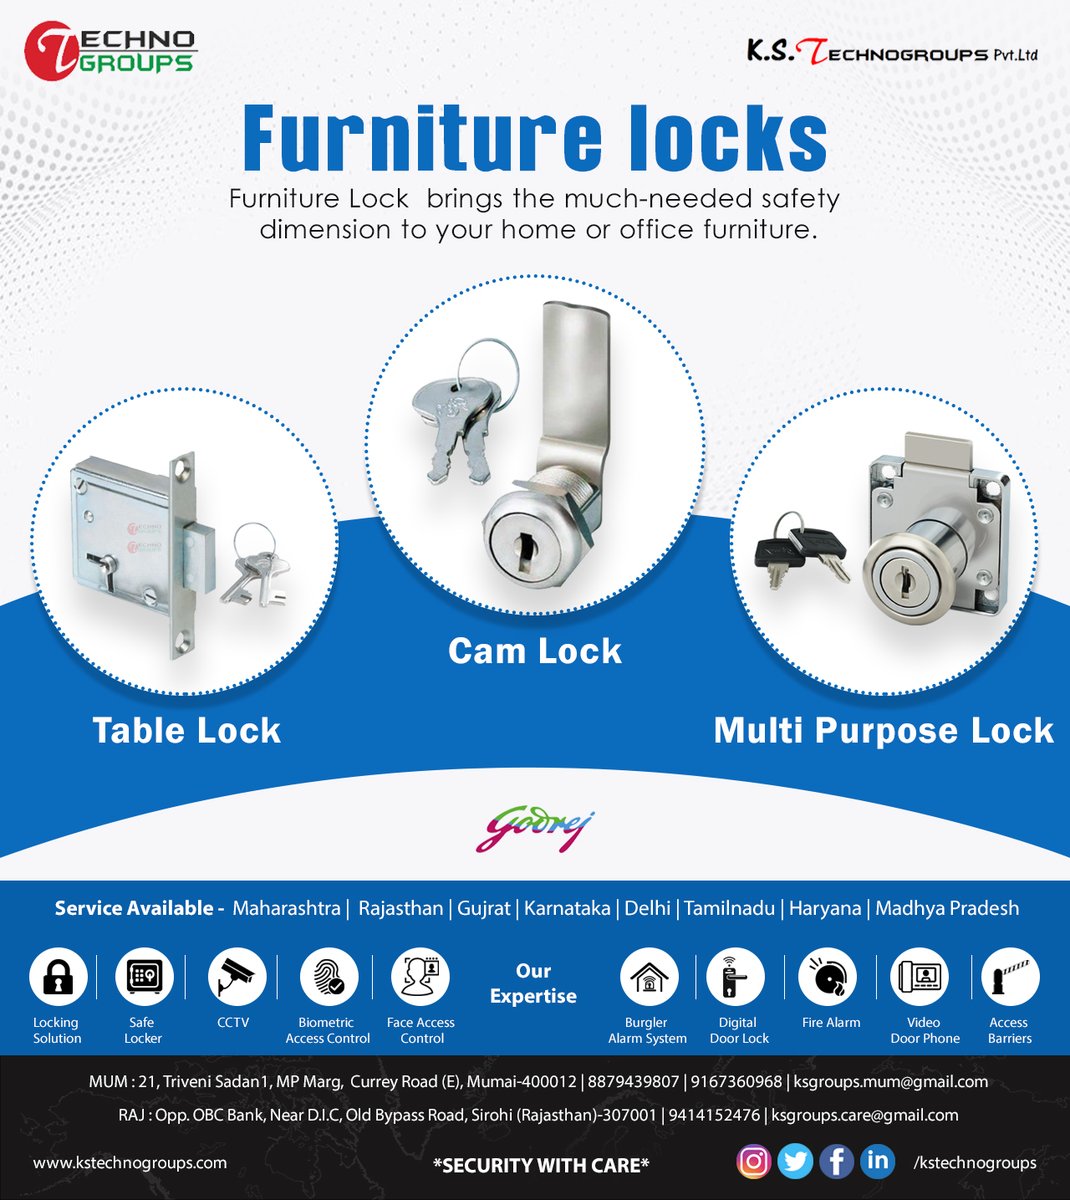 We provide #GodrejLocks for Furniture & Homes. Call @ 8879439807 / 9167360968 
#kstechnogroups #security #securitysystem #securityservices #securitywithcare @mhtjain @sjp52476 #locks #lockingsolutions #doorlocks #furniturelocks